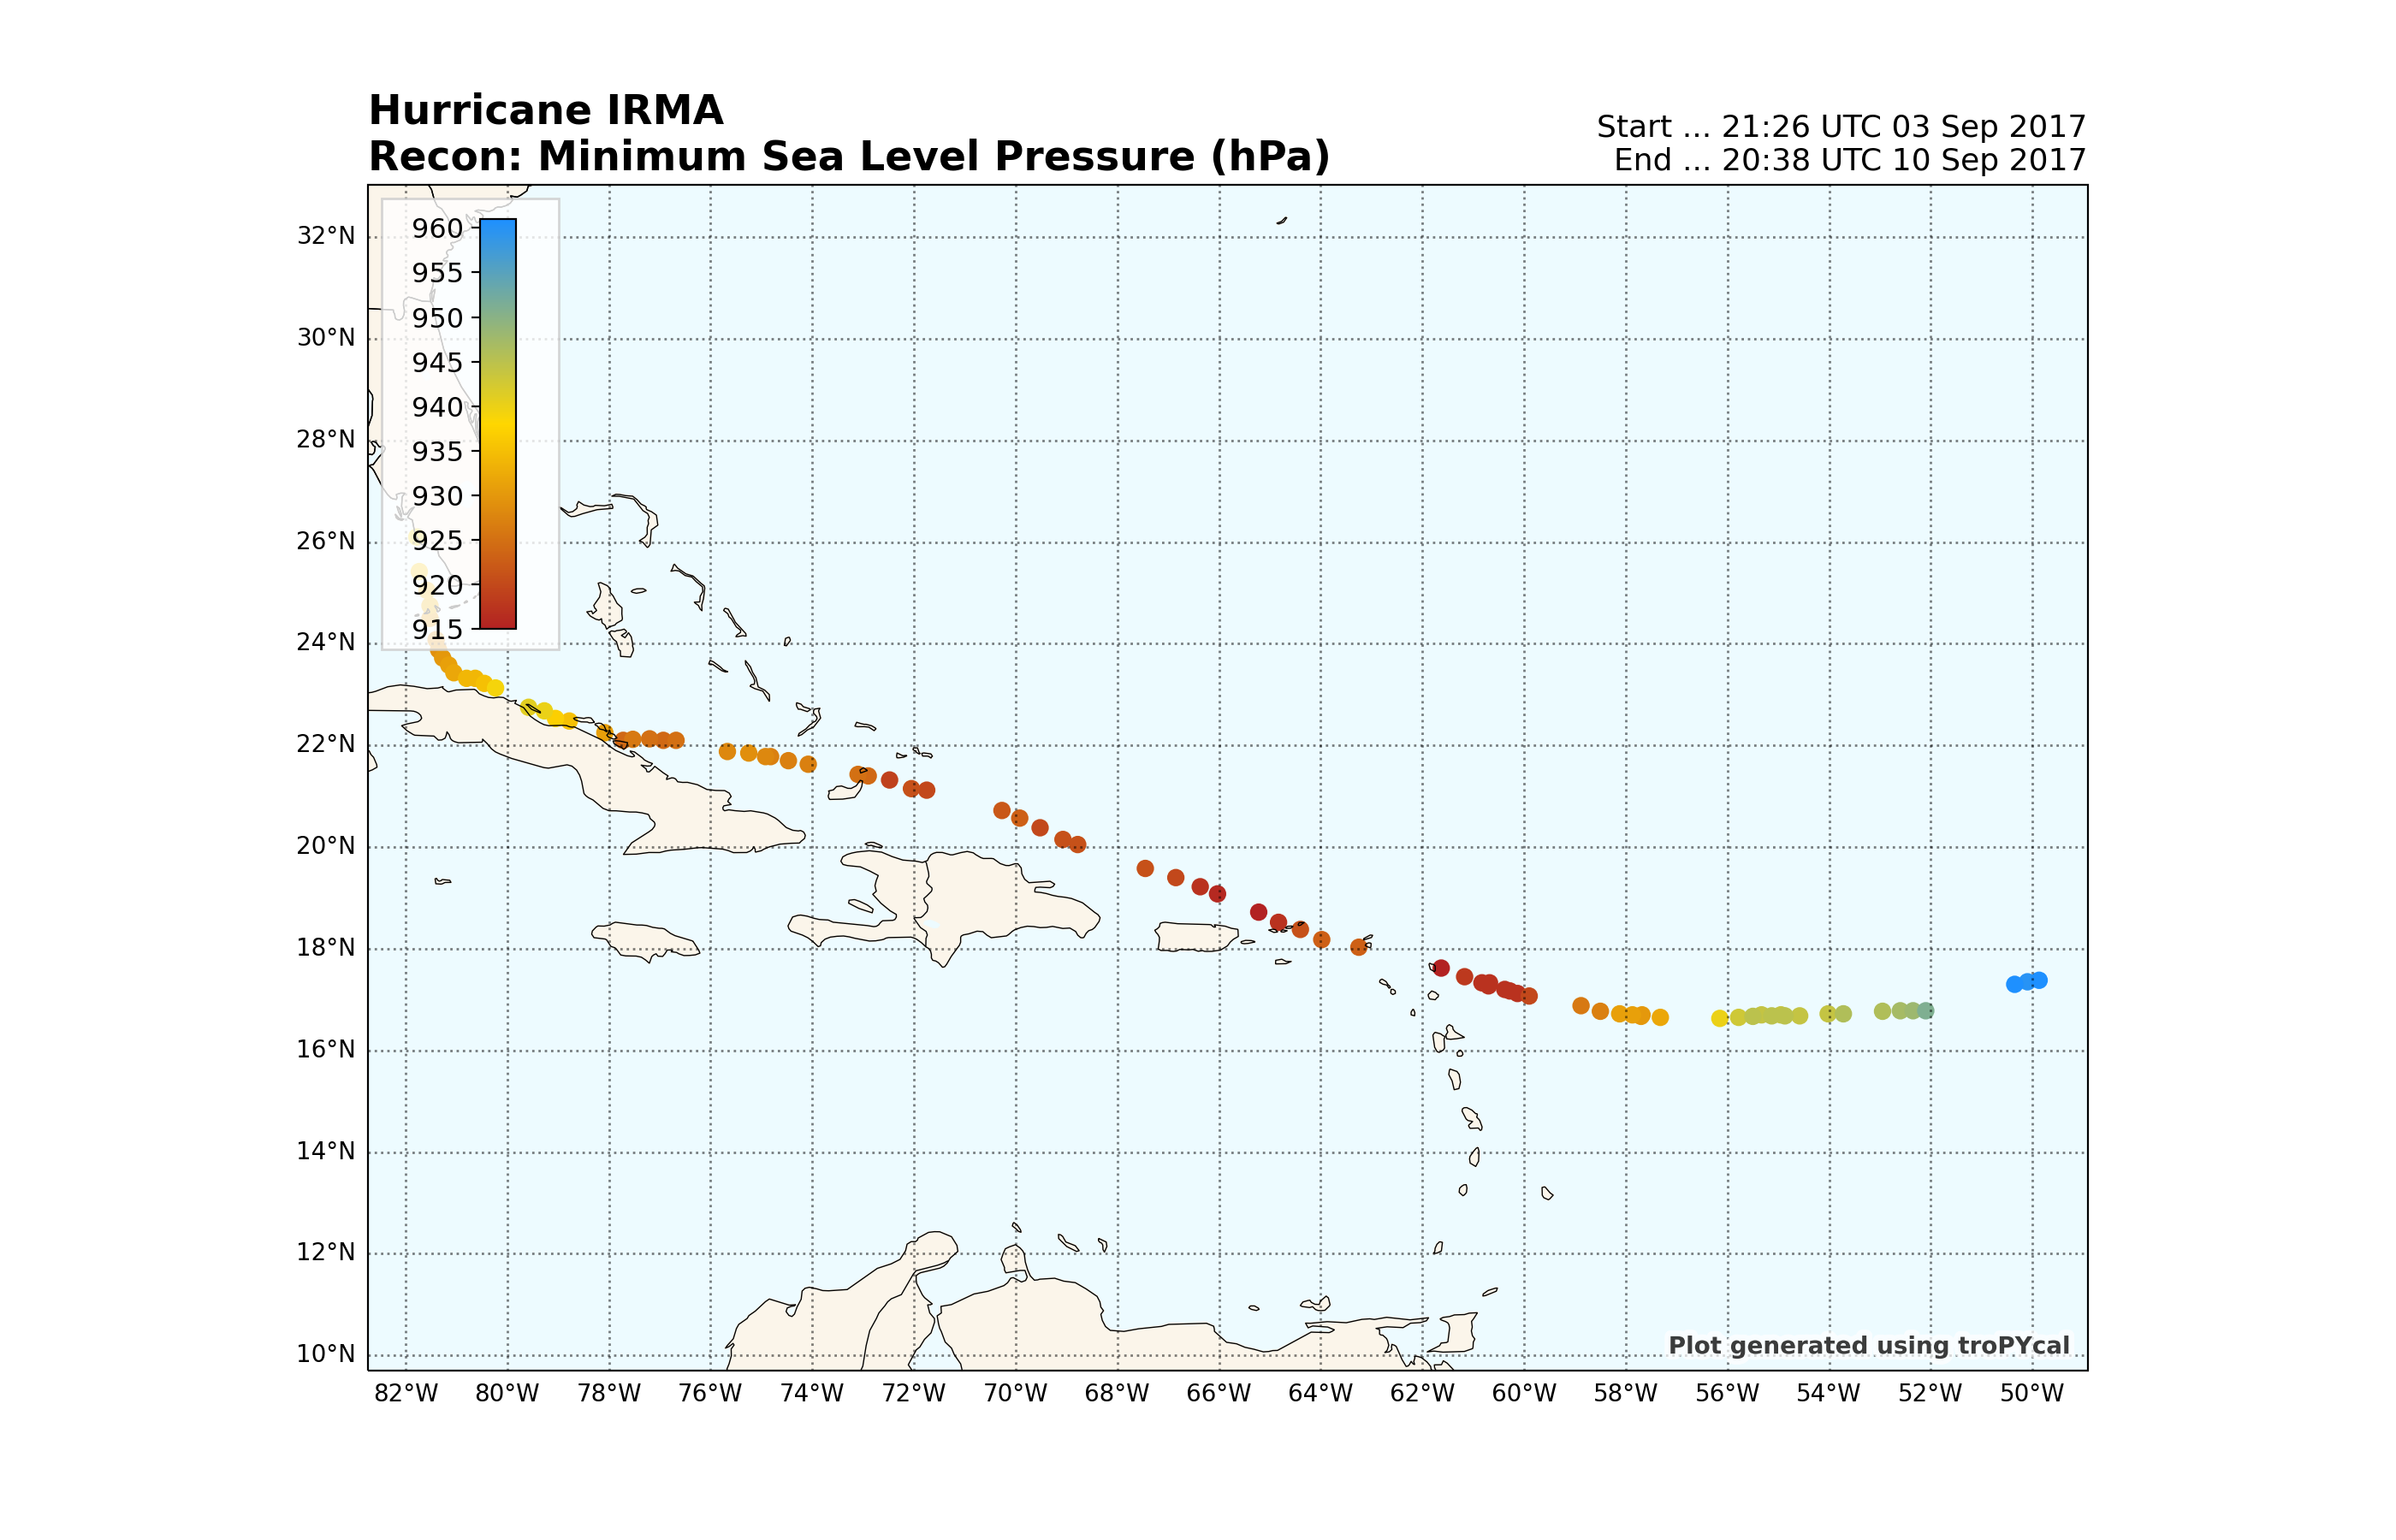 Hurricane IRMA Recon: Minimum Sea Level Pressure (hPa), Start ... 21:26 UTC 03 Sep 2017 End ... 20:38 UTC 10 Sep 2017